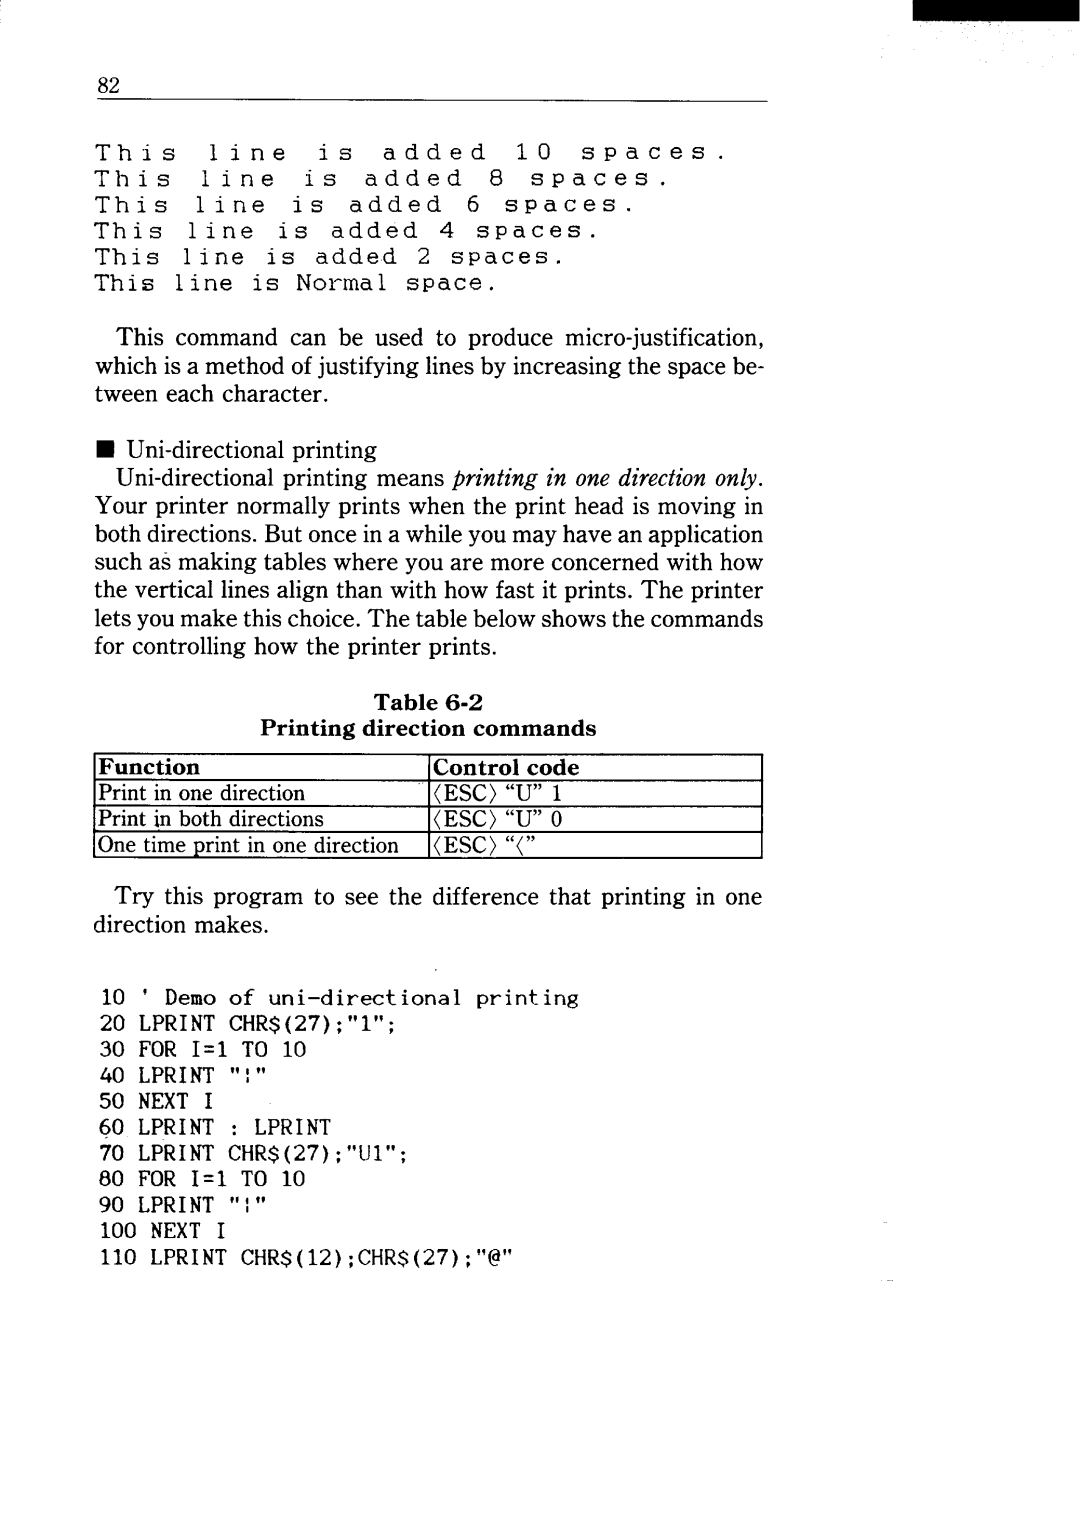 Star Micronics NX-15 user manual Print in one direction, Print in both directions, Esc “U” O 